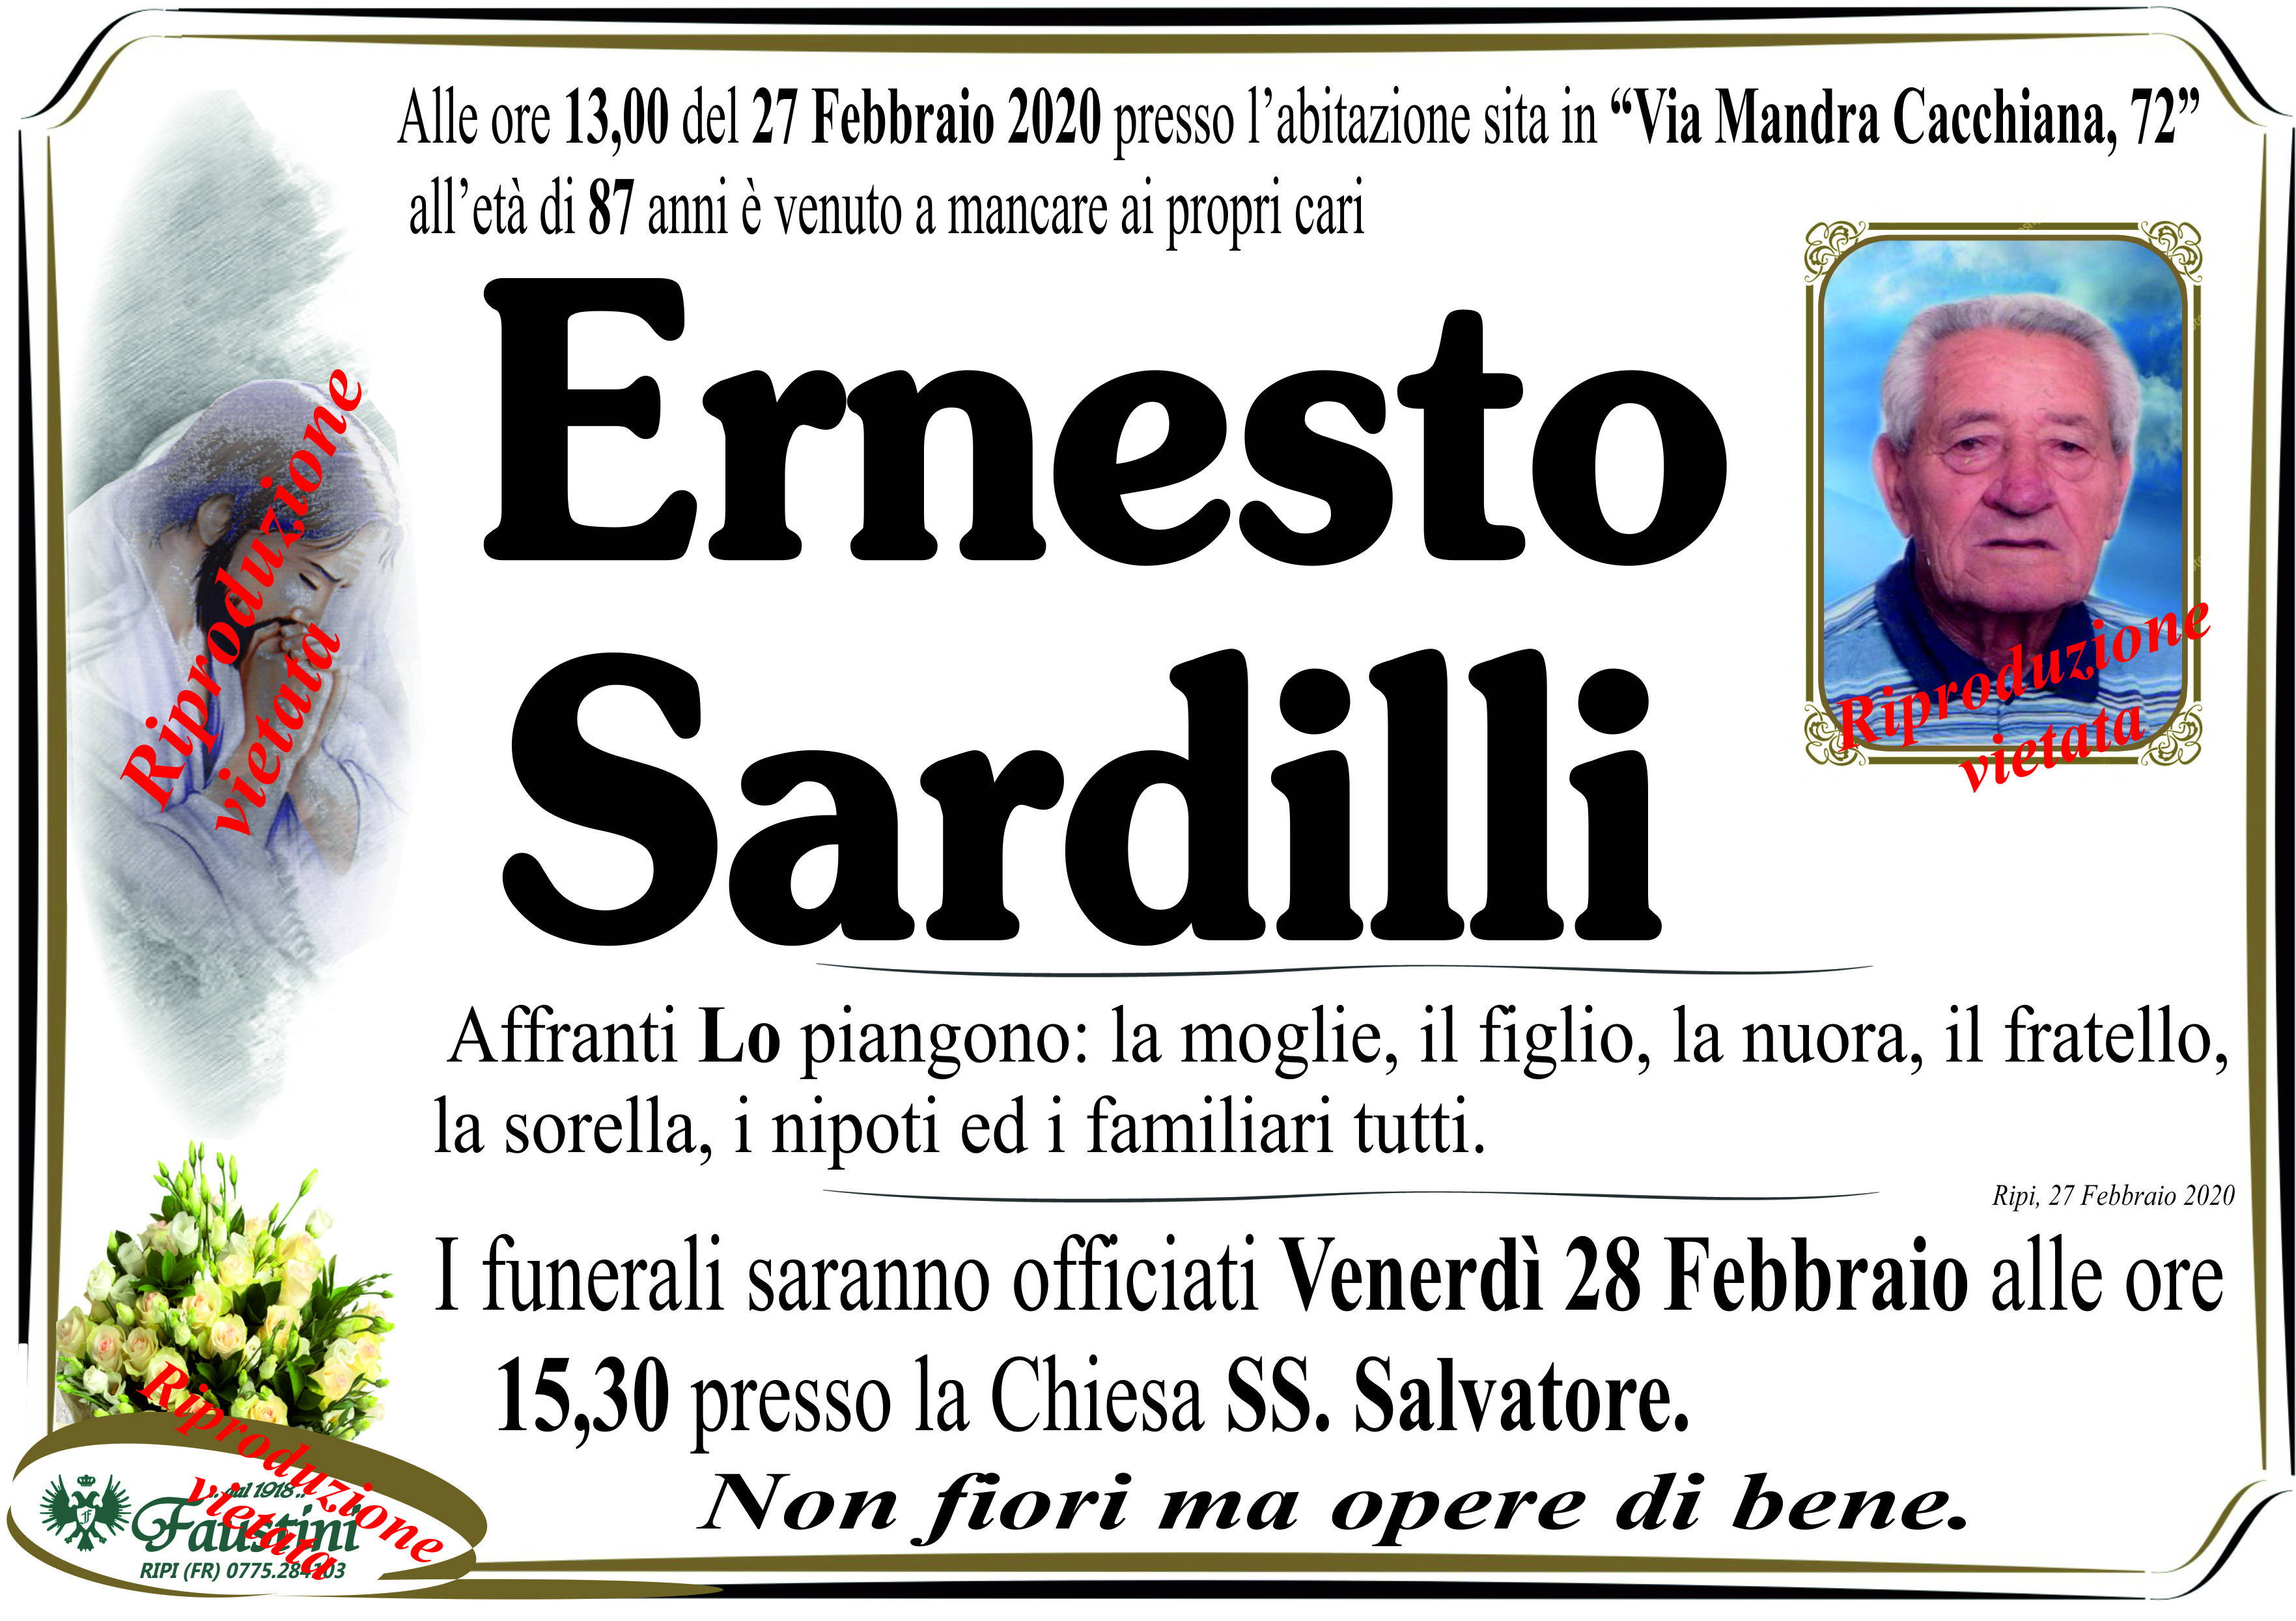 Ernesto Sardilli